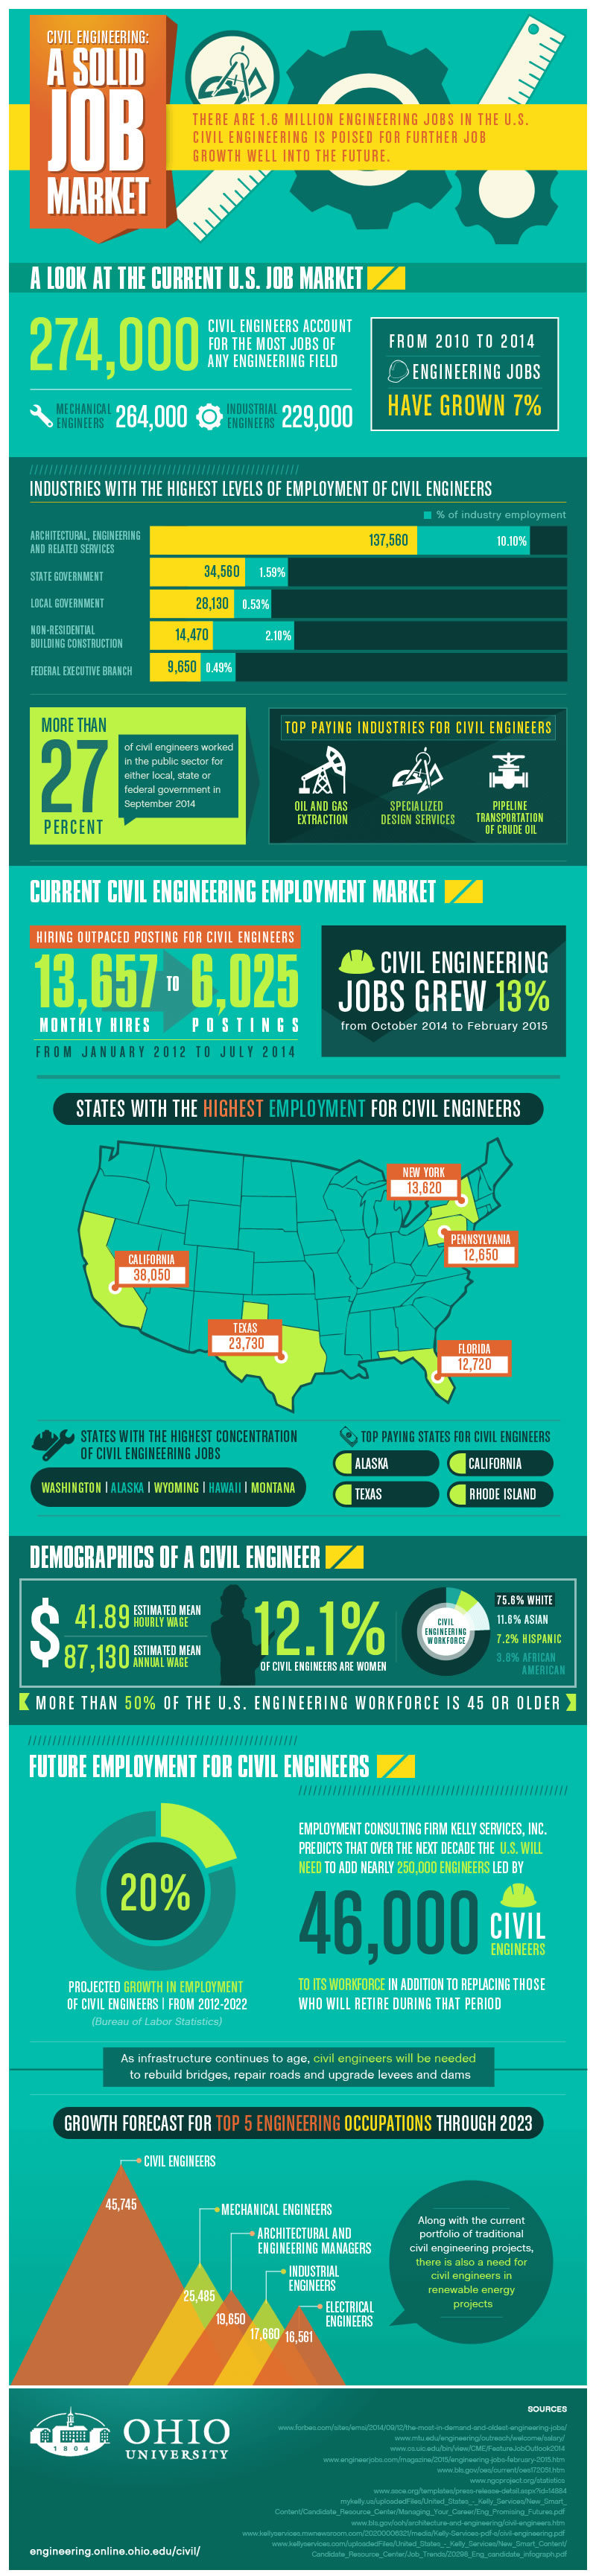 Civil Engineering is a Solid Job Market gt ENGINEERING com